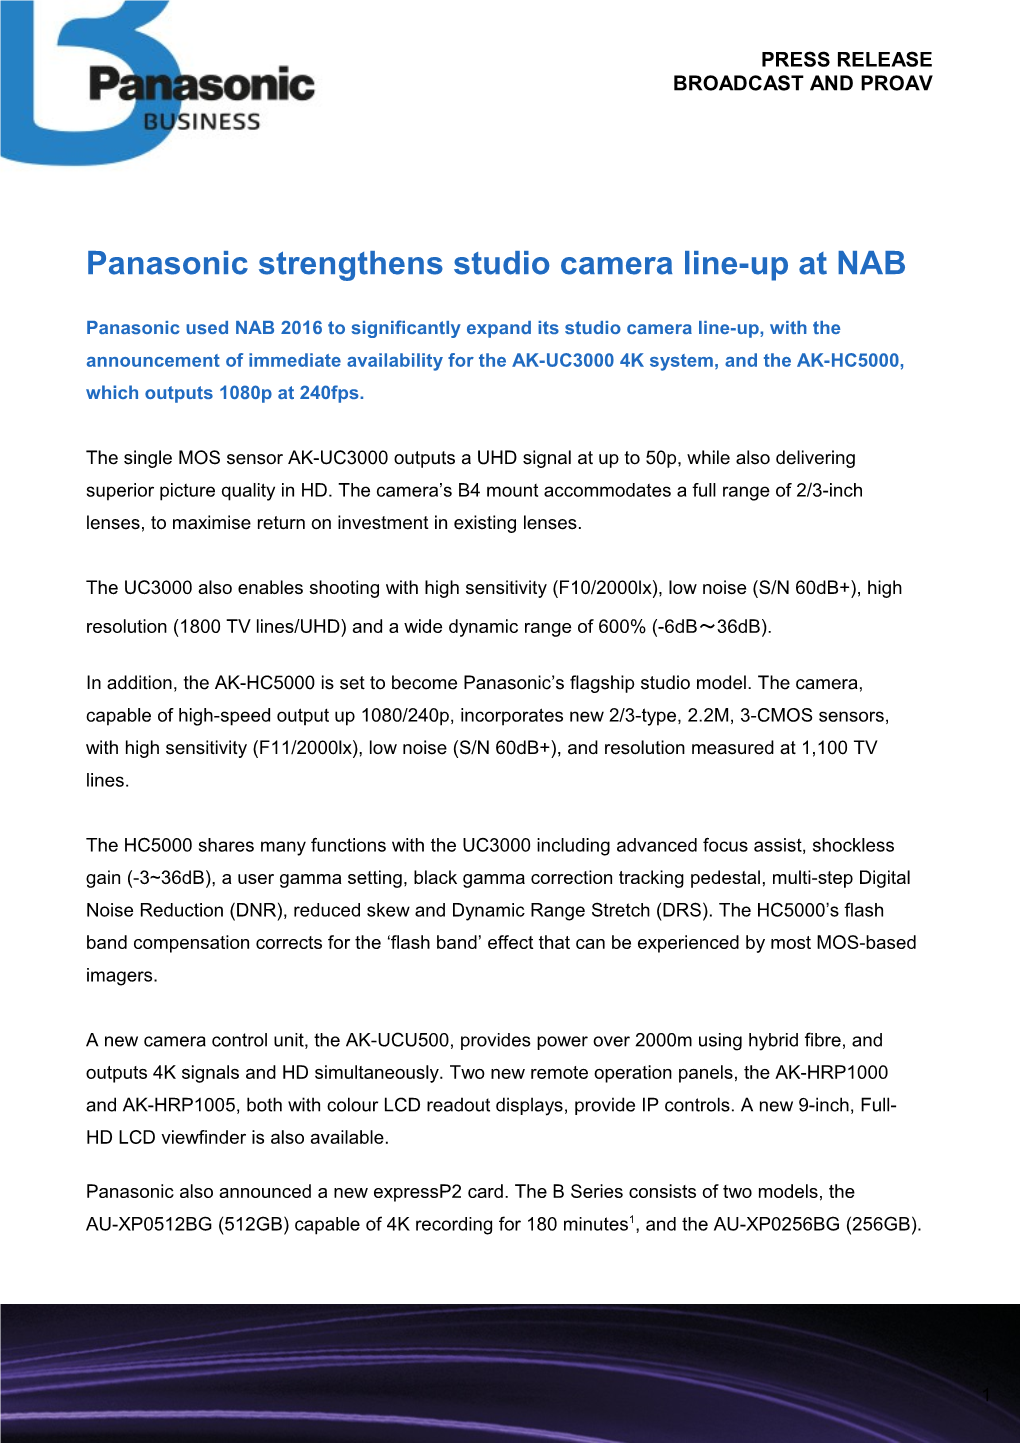 Panasonic Strengthens Studio Camera Line-Up at NAB